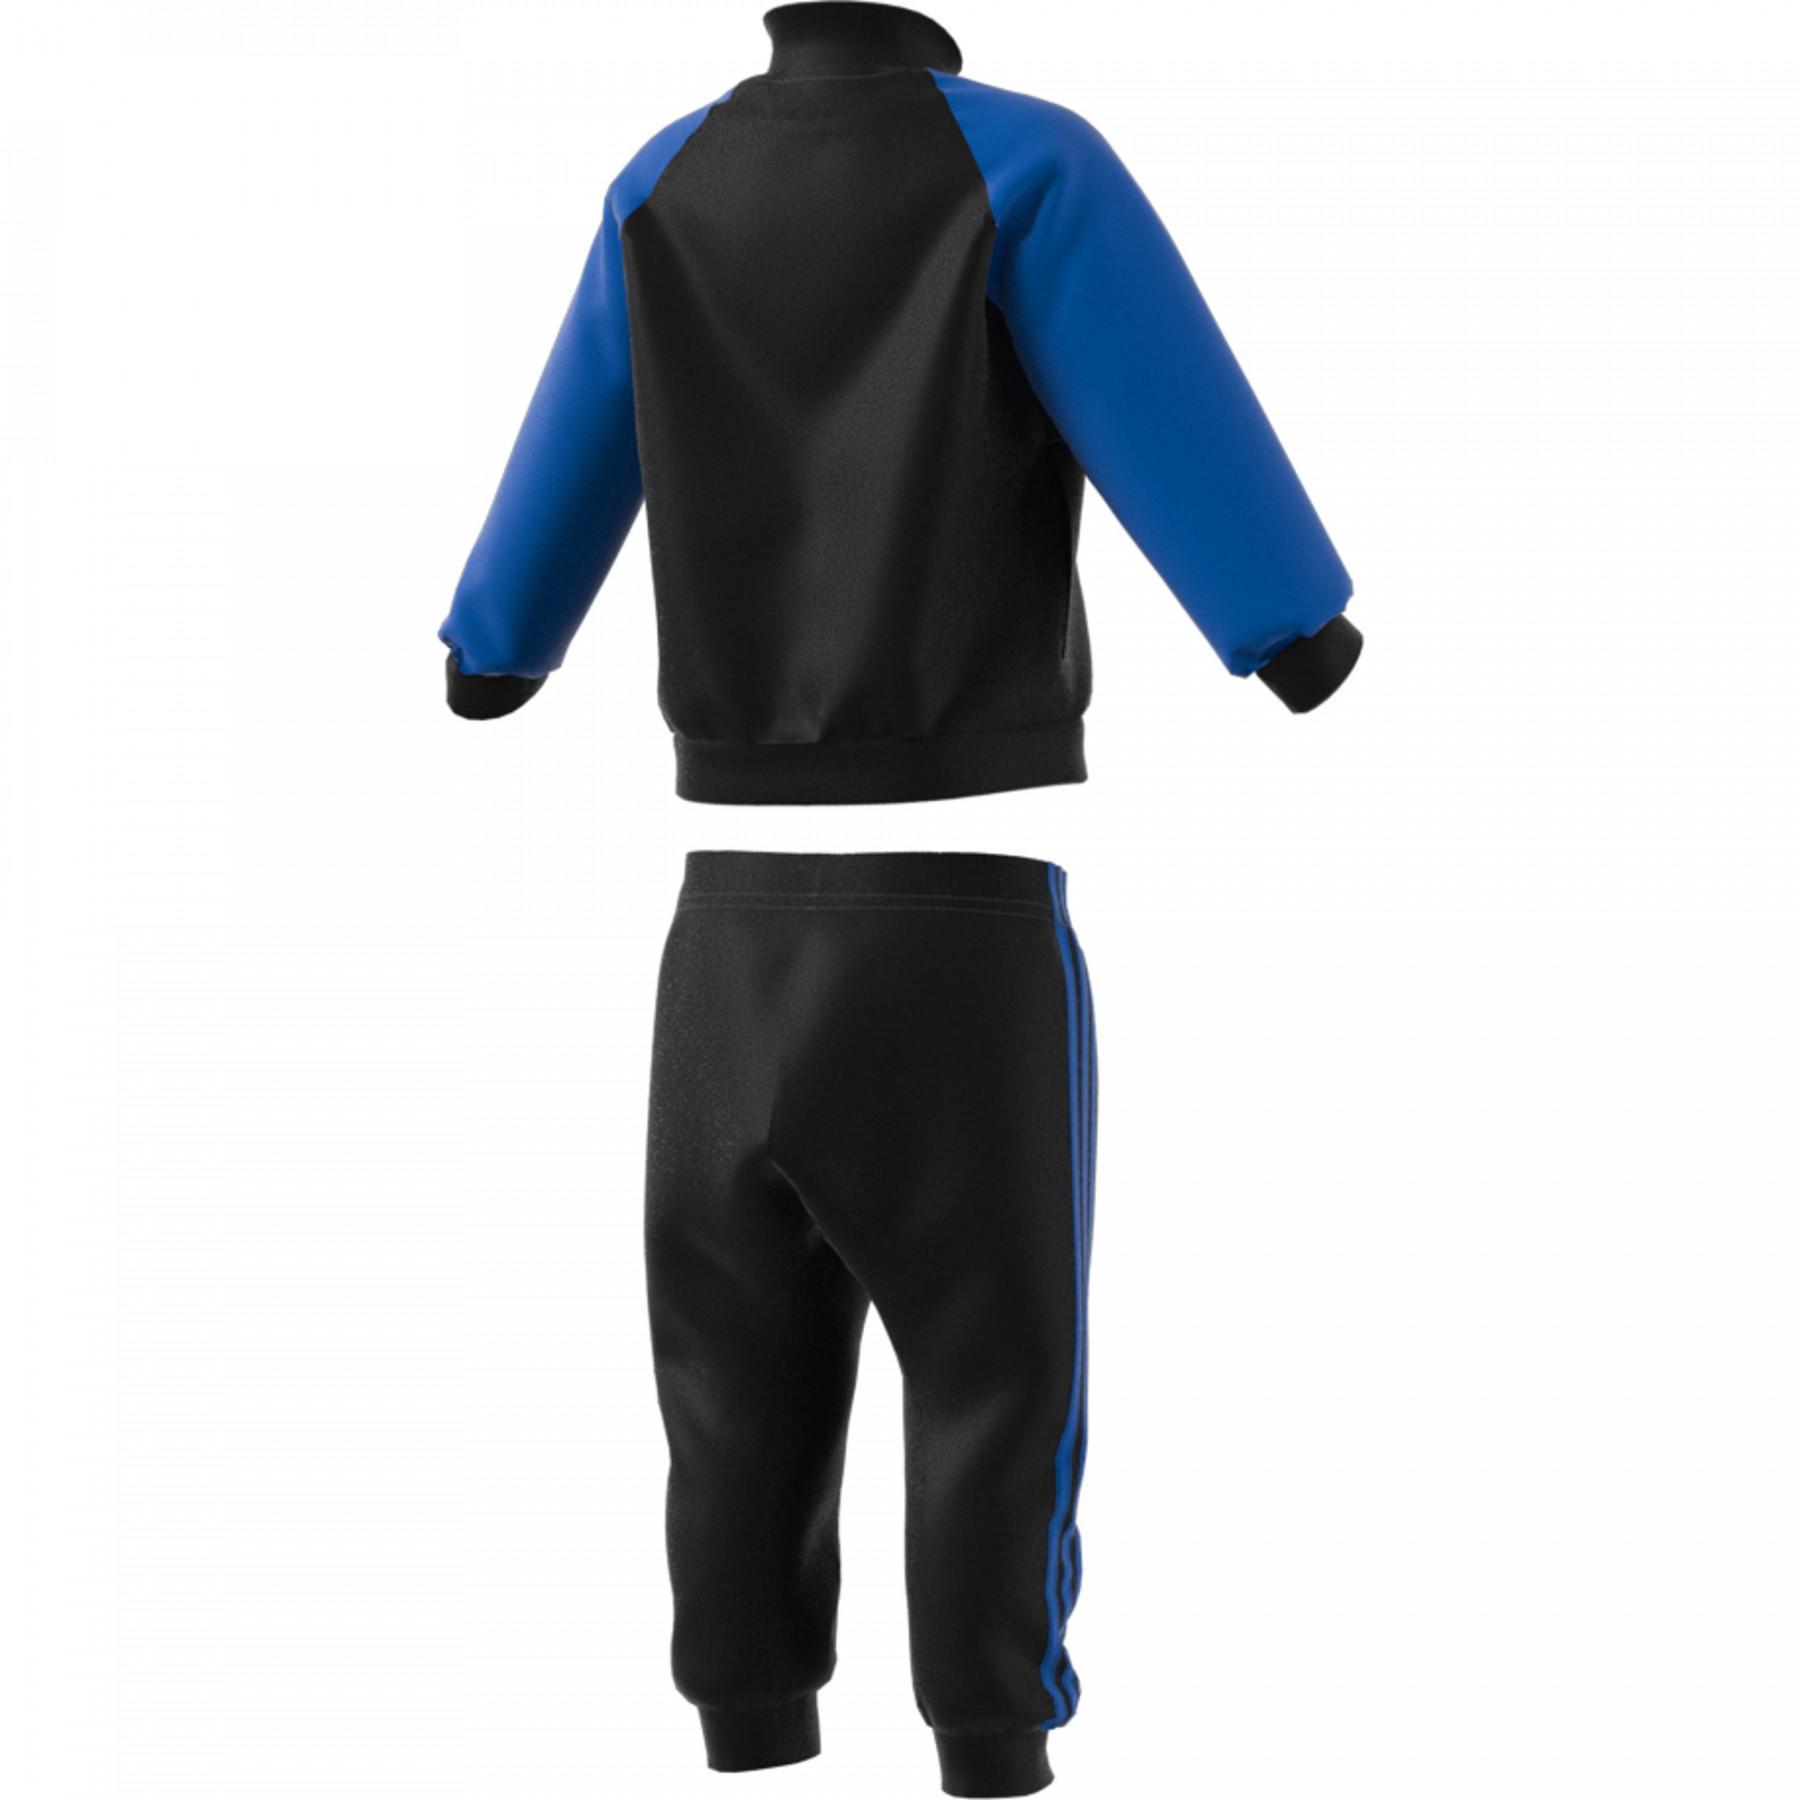 Track suit kid adidas Base Fleece Jogger Set